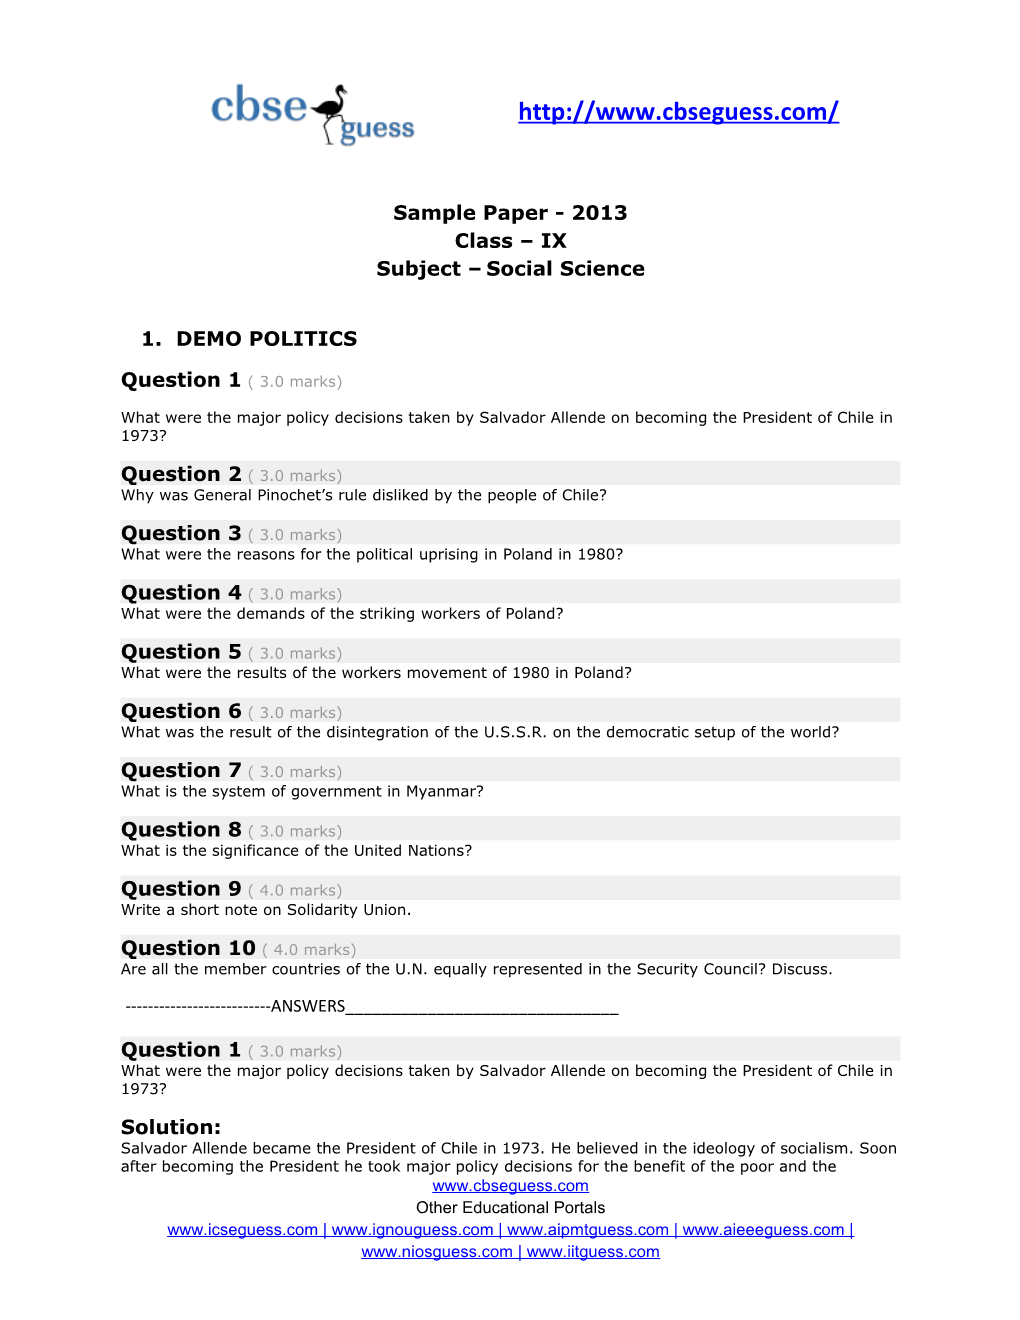 Sample Paper - 2013 Class IX Subject Social Science